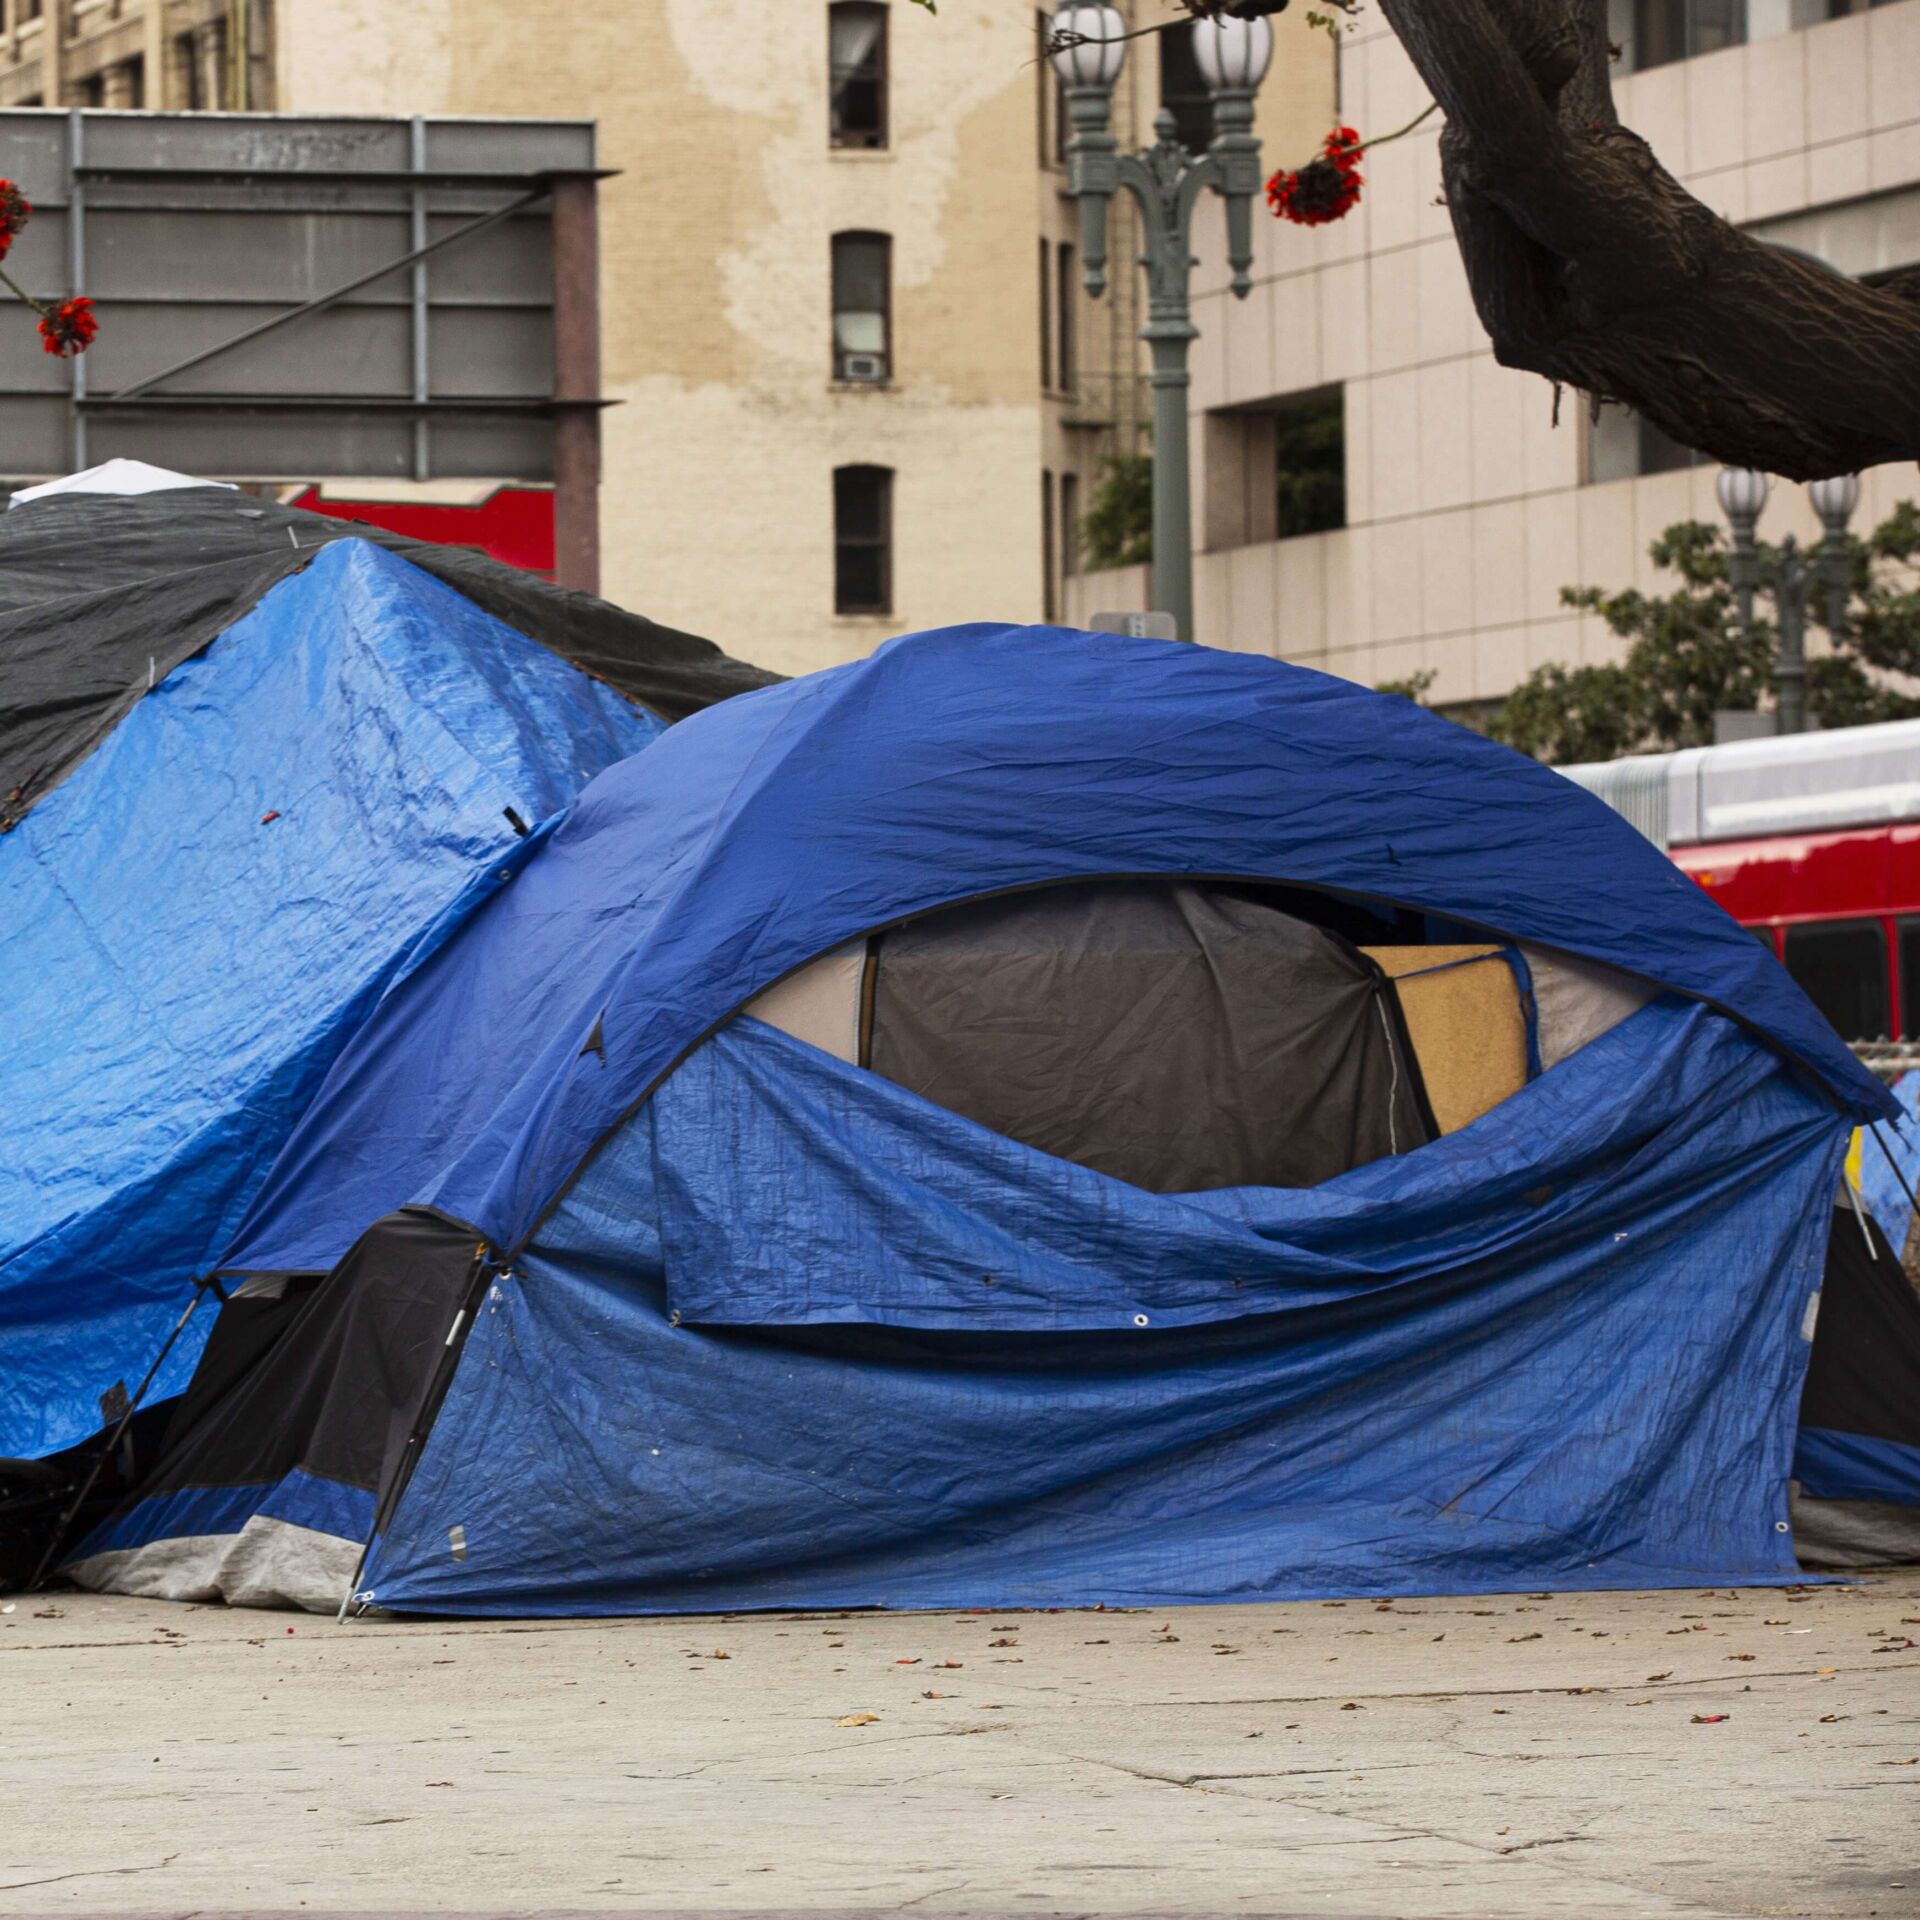 Southern California Homeless Encampment